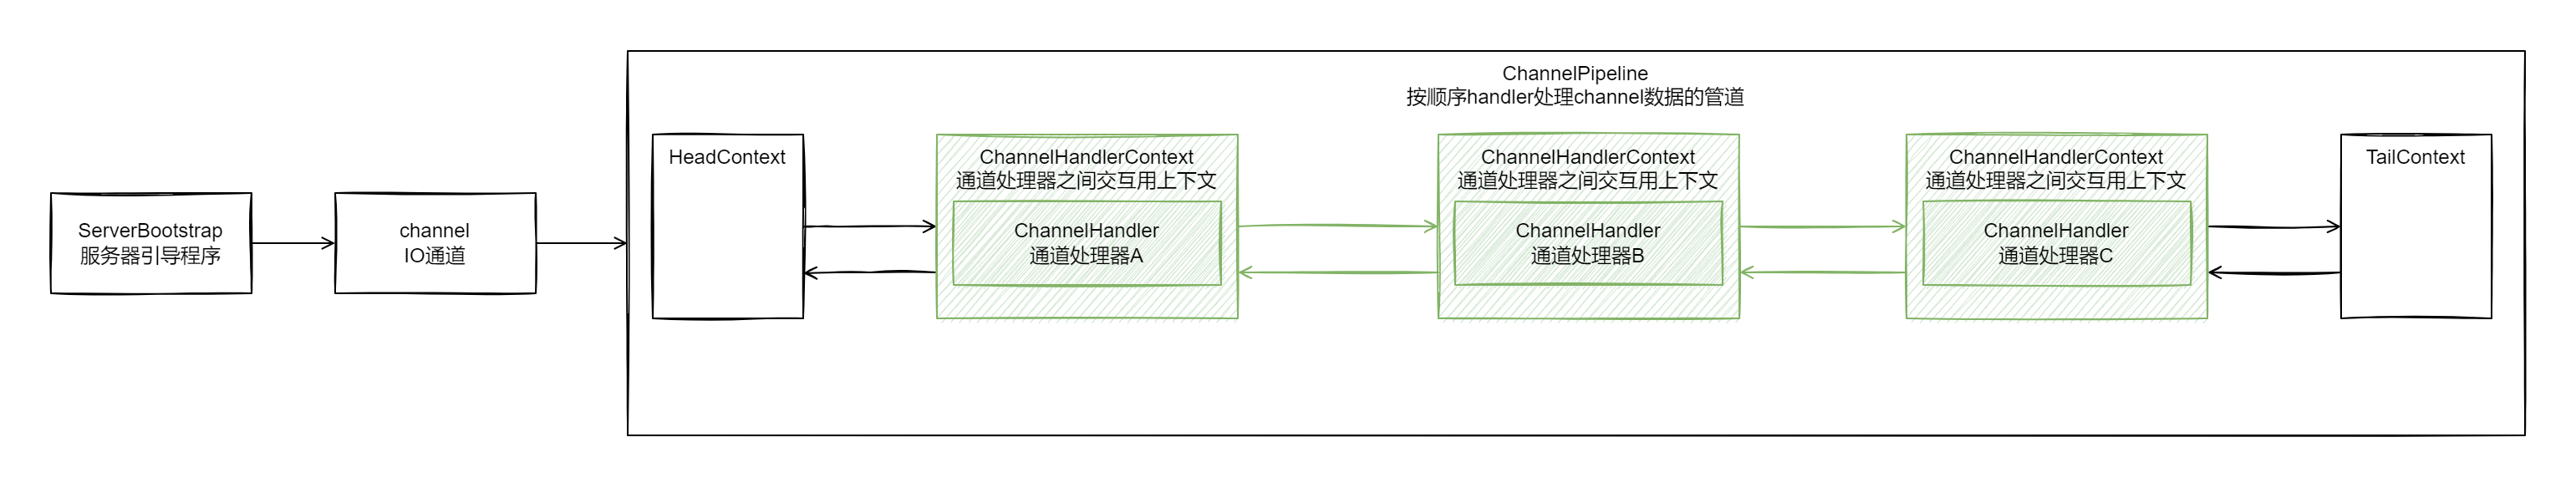 ServerBootstrap与channelgng channelPipeline关系